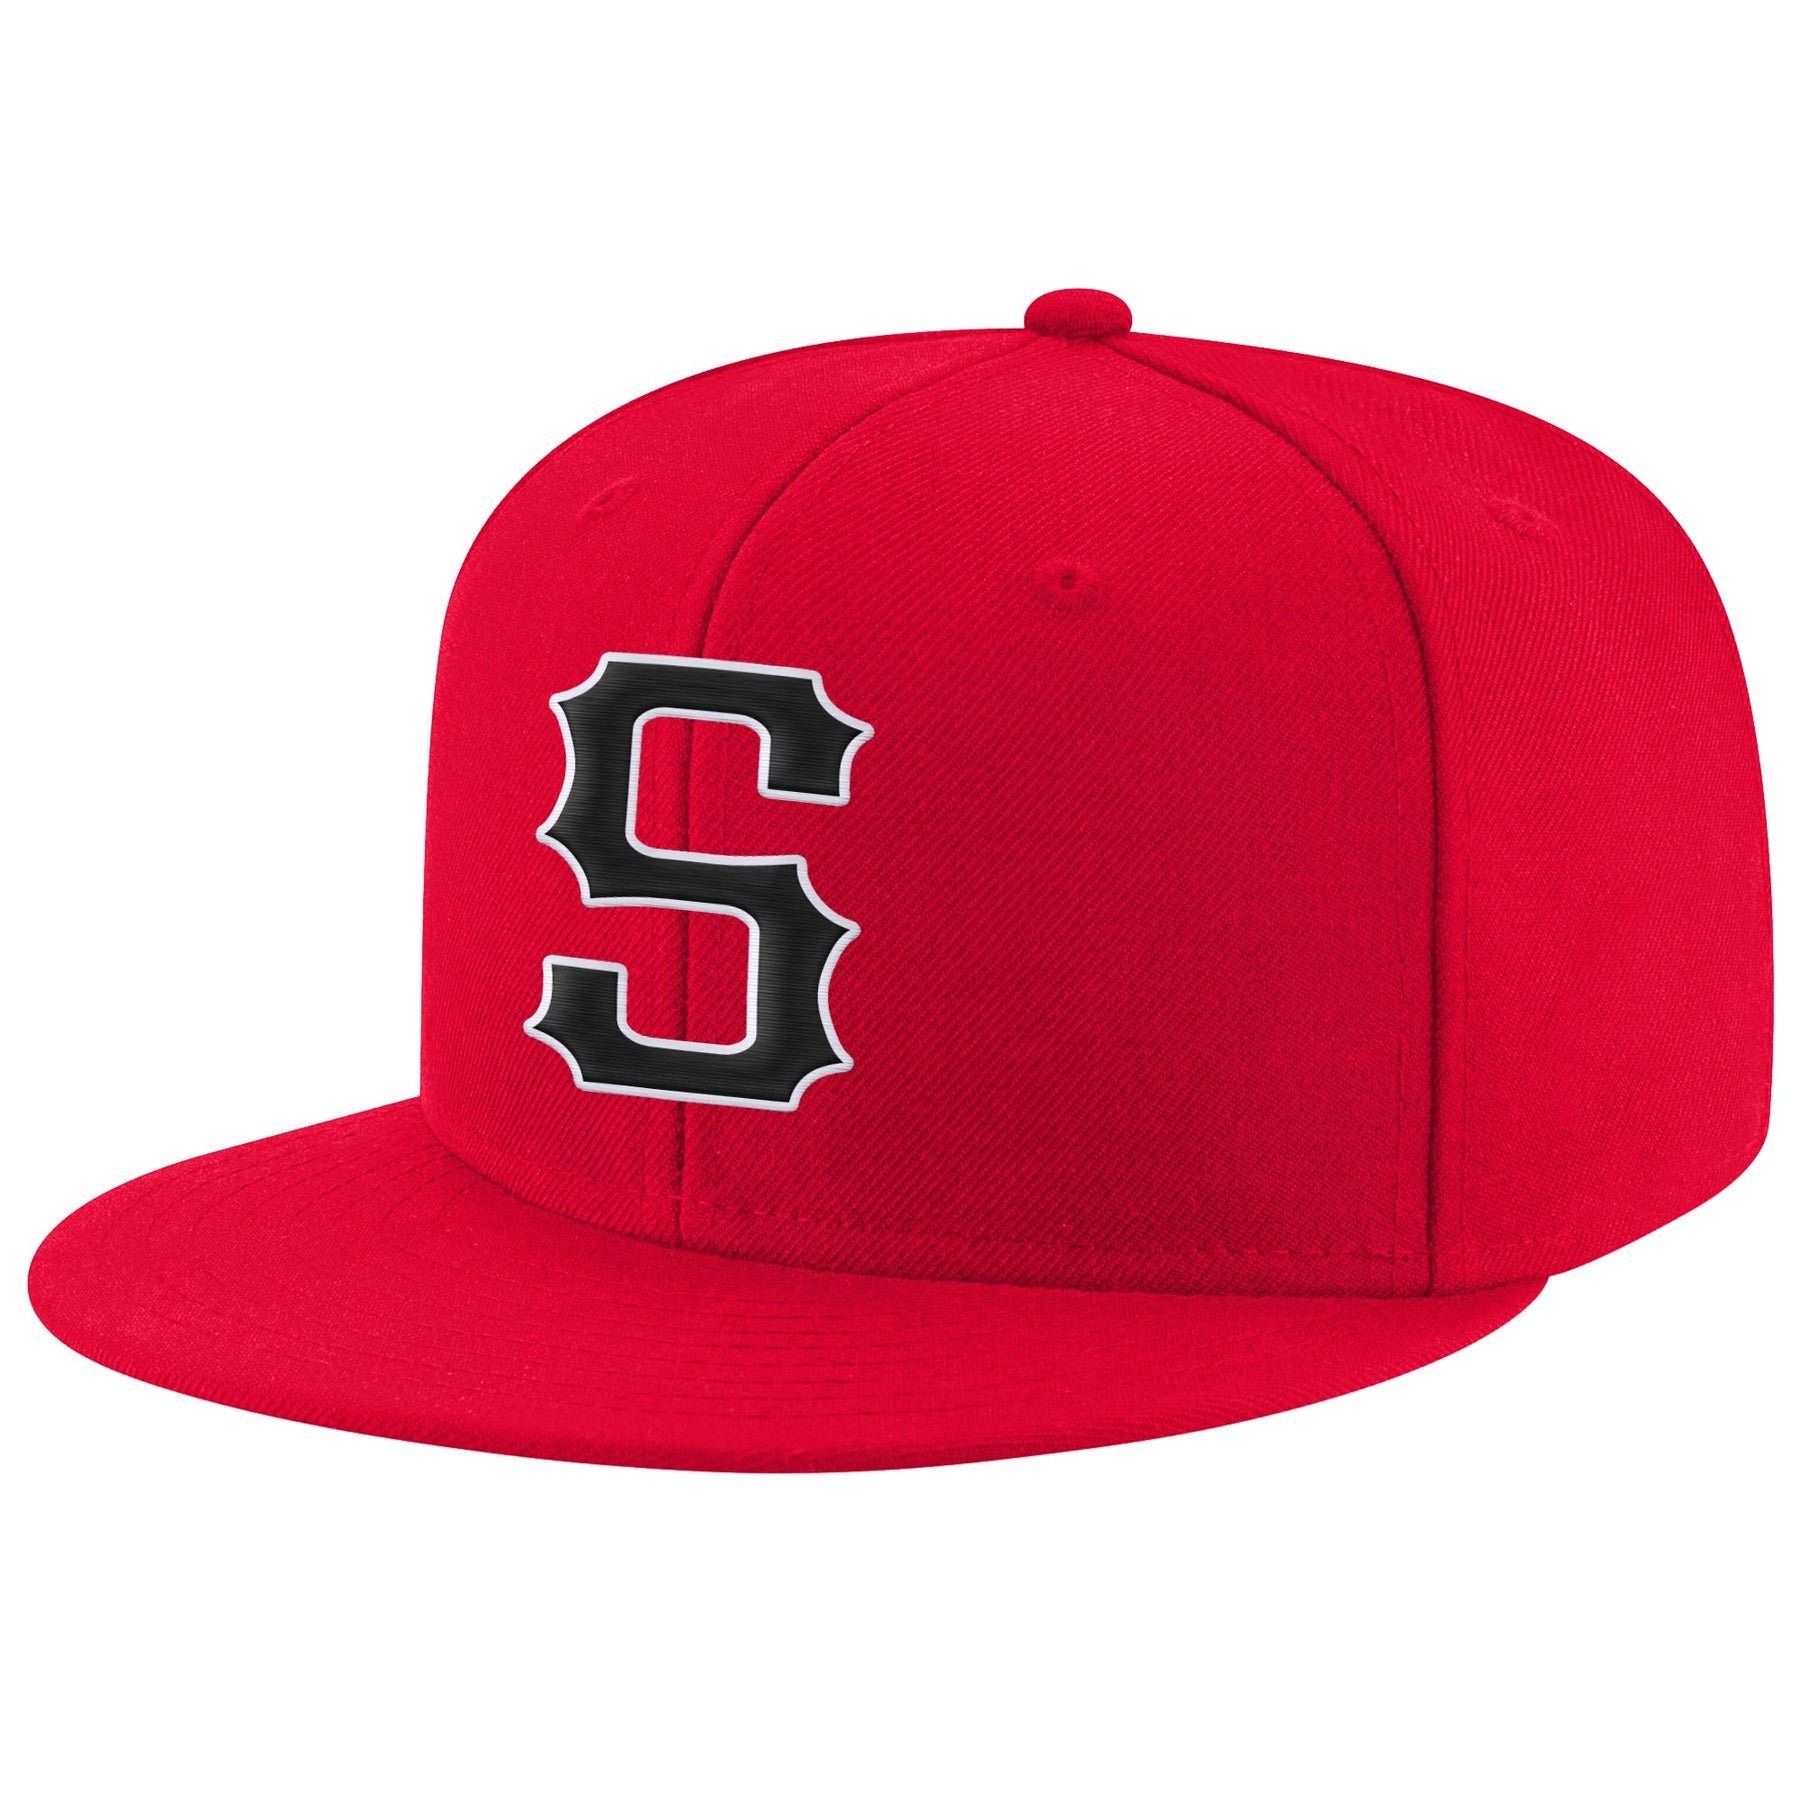 Custom Red Black-White Stitched Adjustable Snapback Hat